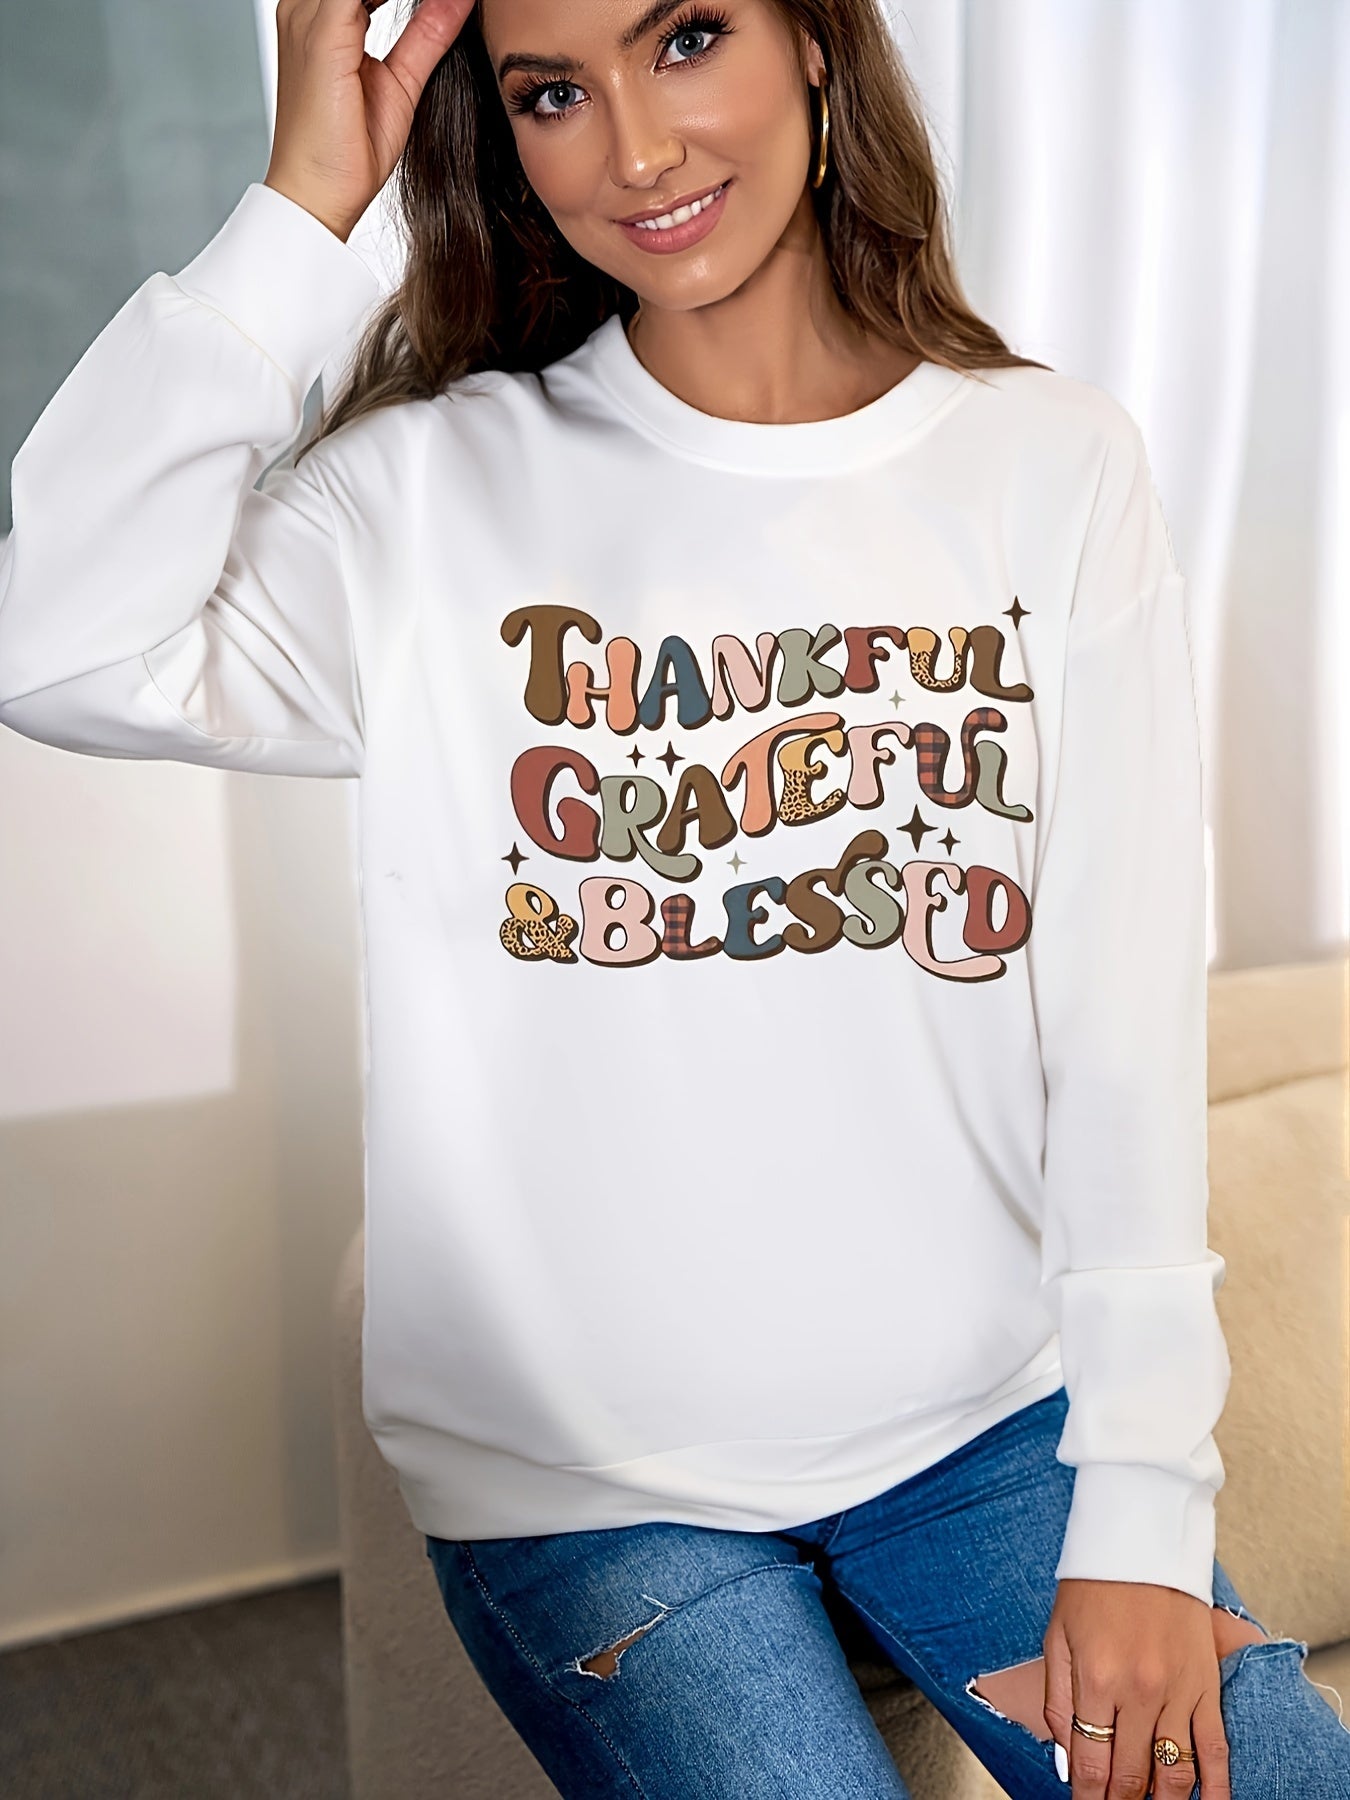 Thankful Grateful Blessed (thanksgiving themed) Women's Christian Pullover Sweatshirt claimedbygoddesigns